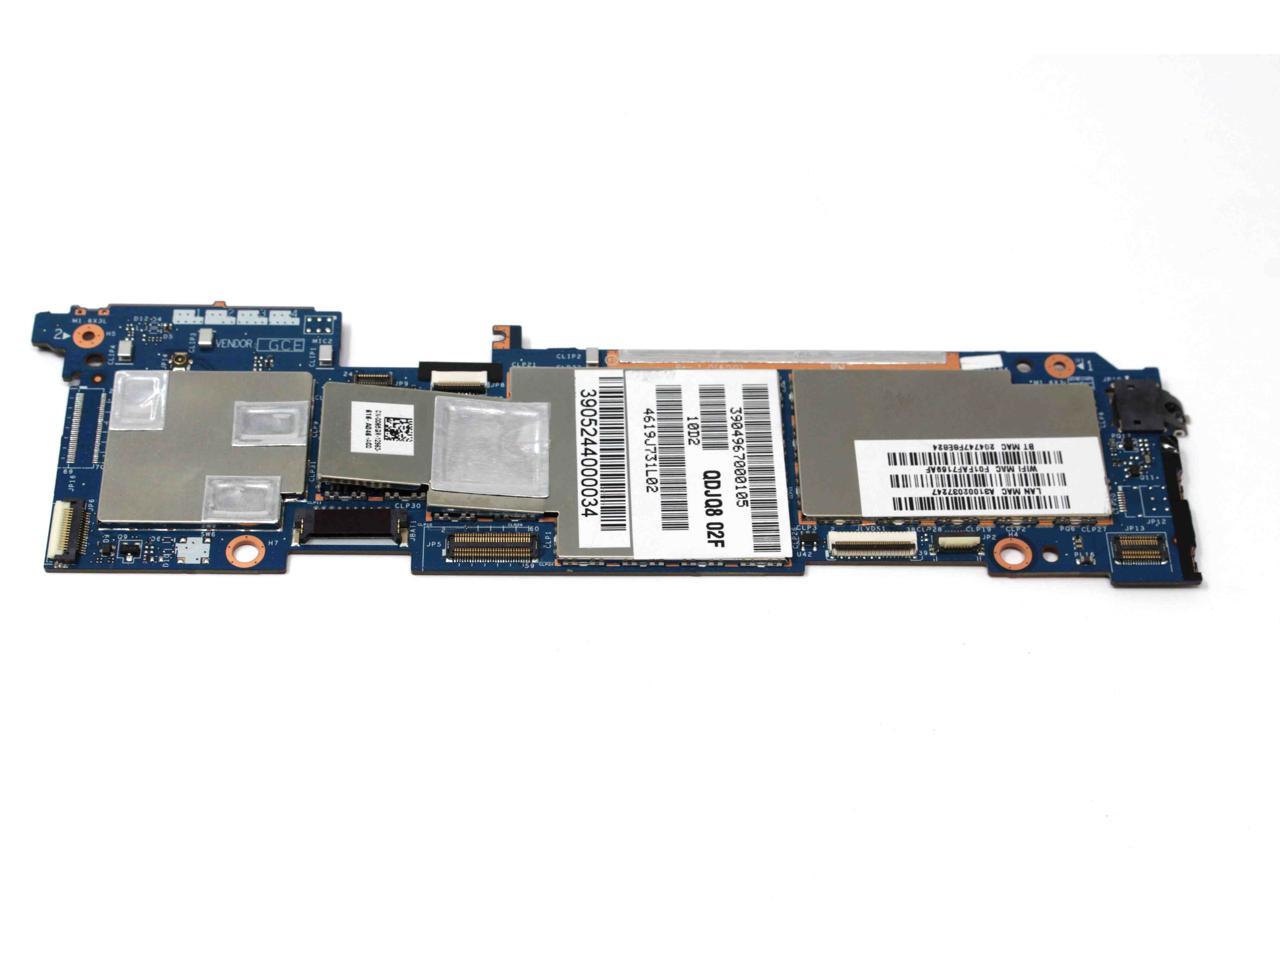 New Dell Xps 10 10 1 32gb Storage 2gb Ram Tablet Motherboard 085gr Cn 0085gr Y6g7n Gp3km 4dy95 Qdjq8 04 La 8761p Newegg Com